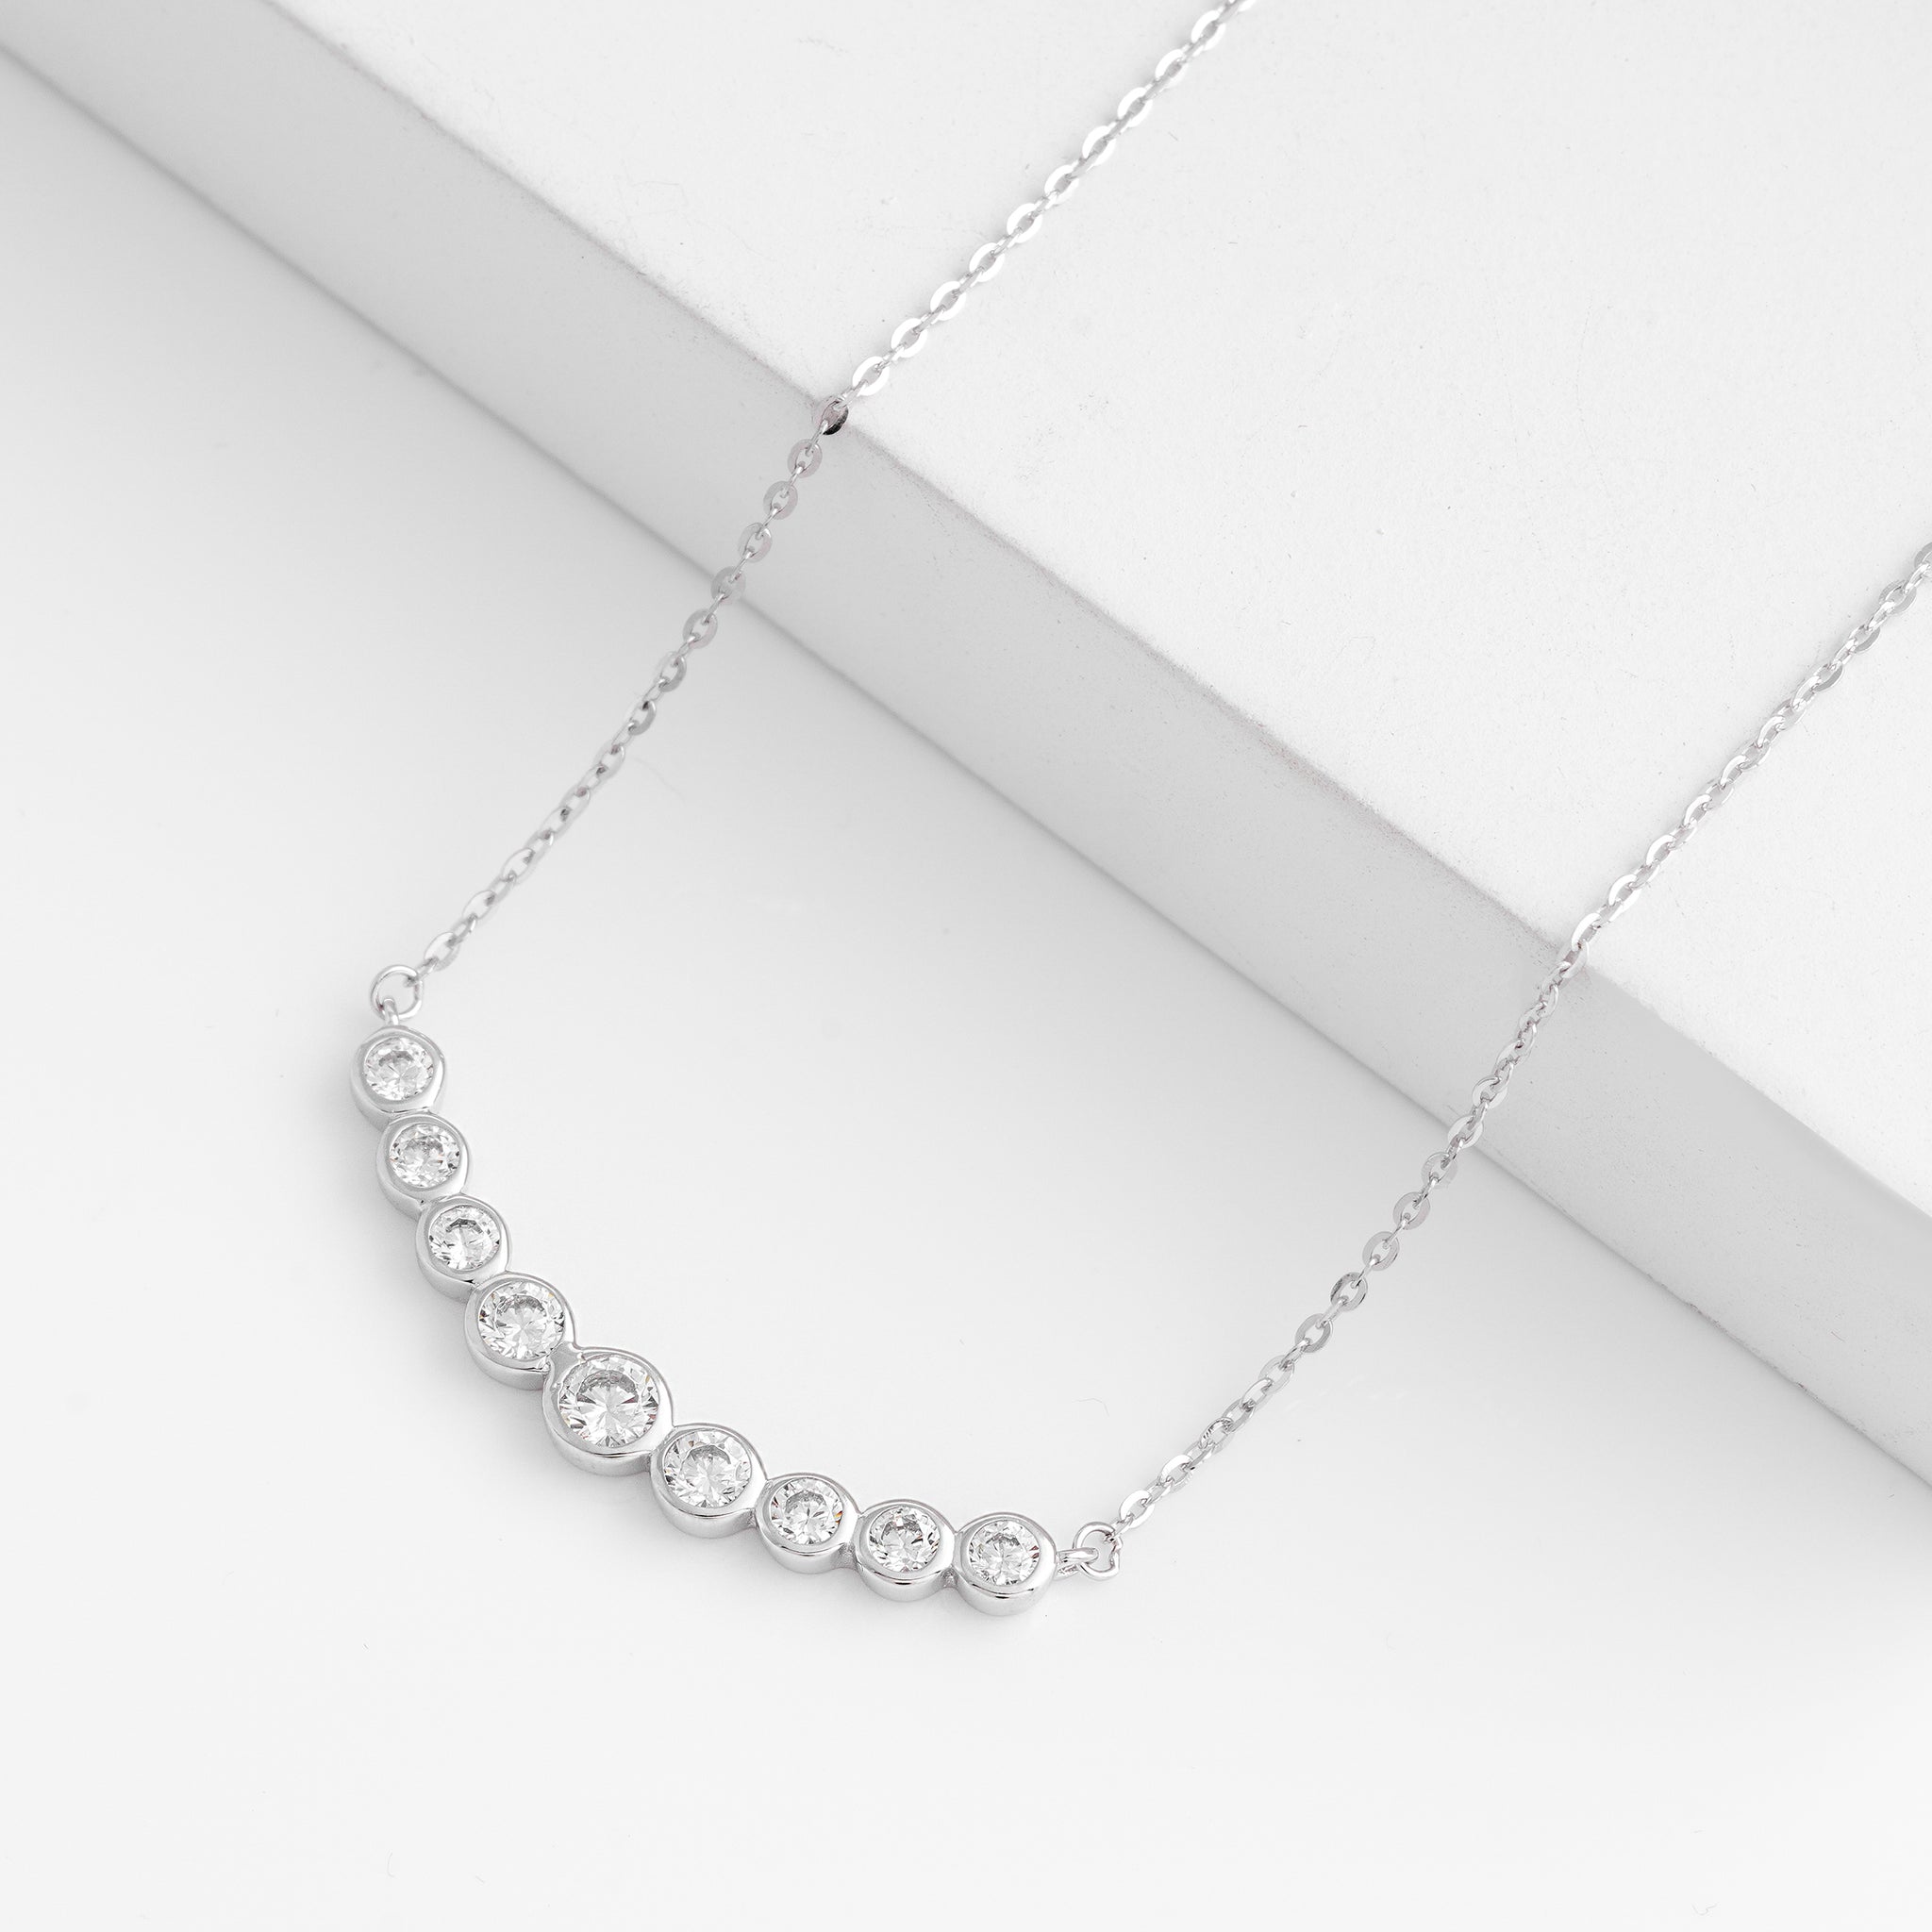 Lightweight Bezel Set Cubic Zirconia Diamond 925 Sterling Silver Pendant Chain